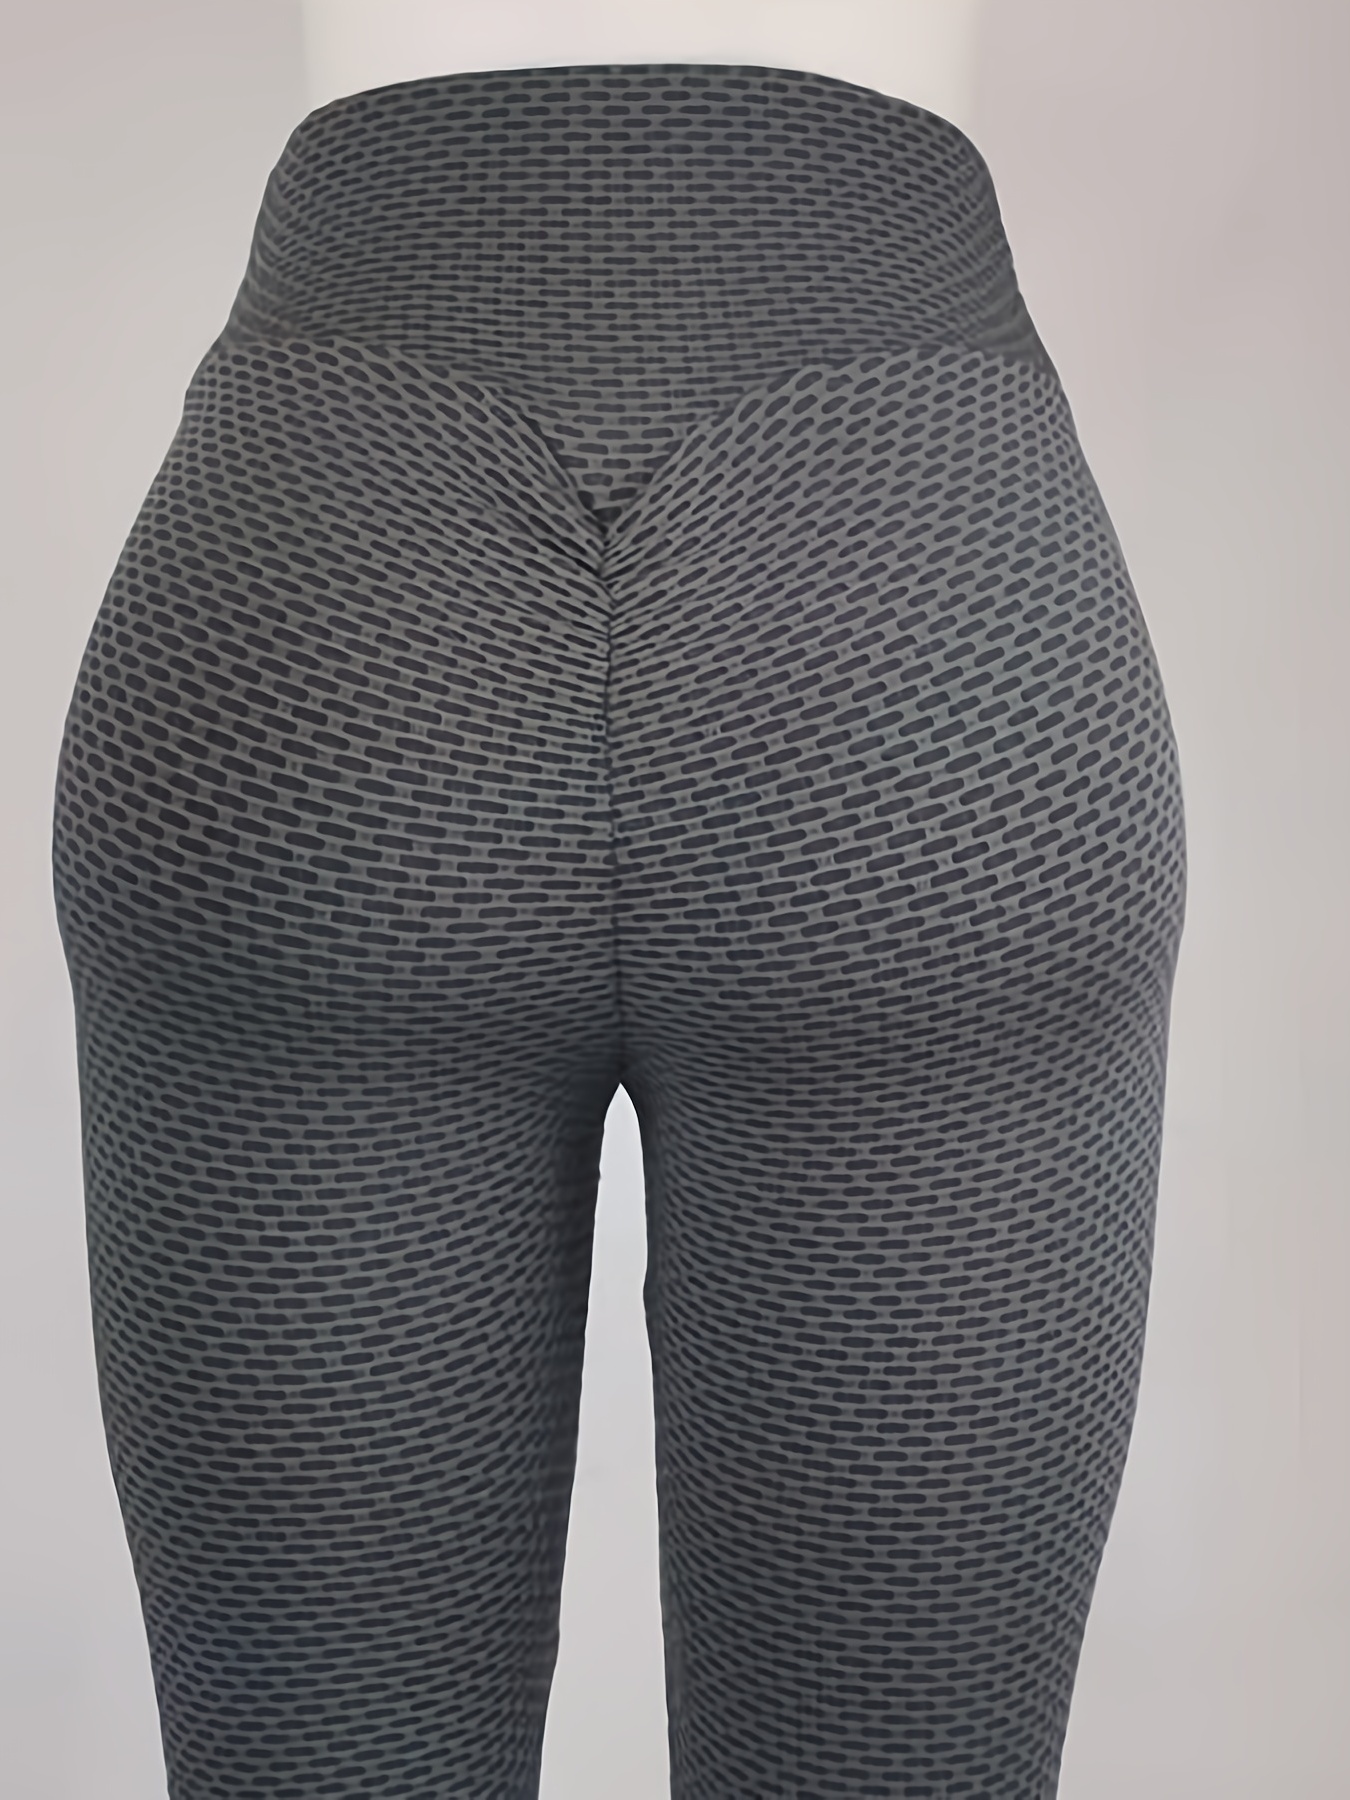 Qoo10 - GLOWMODE FeatherFit™ leggings with high waist, side pocket :  Sportswear